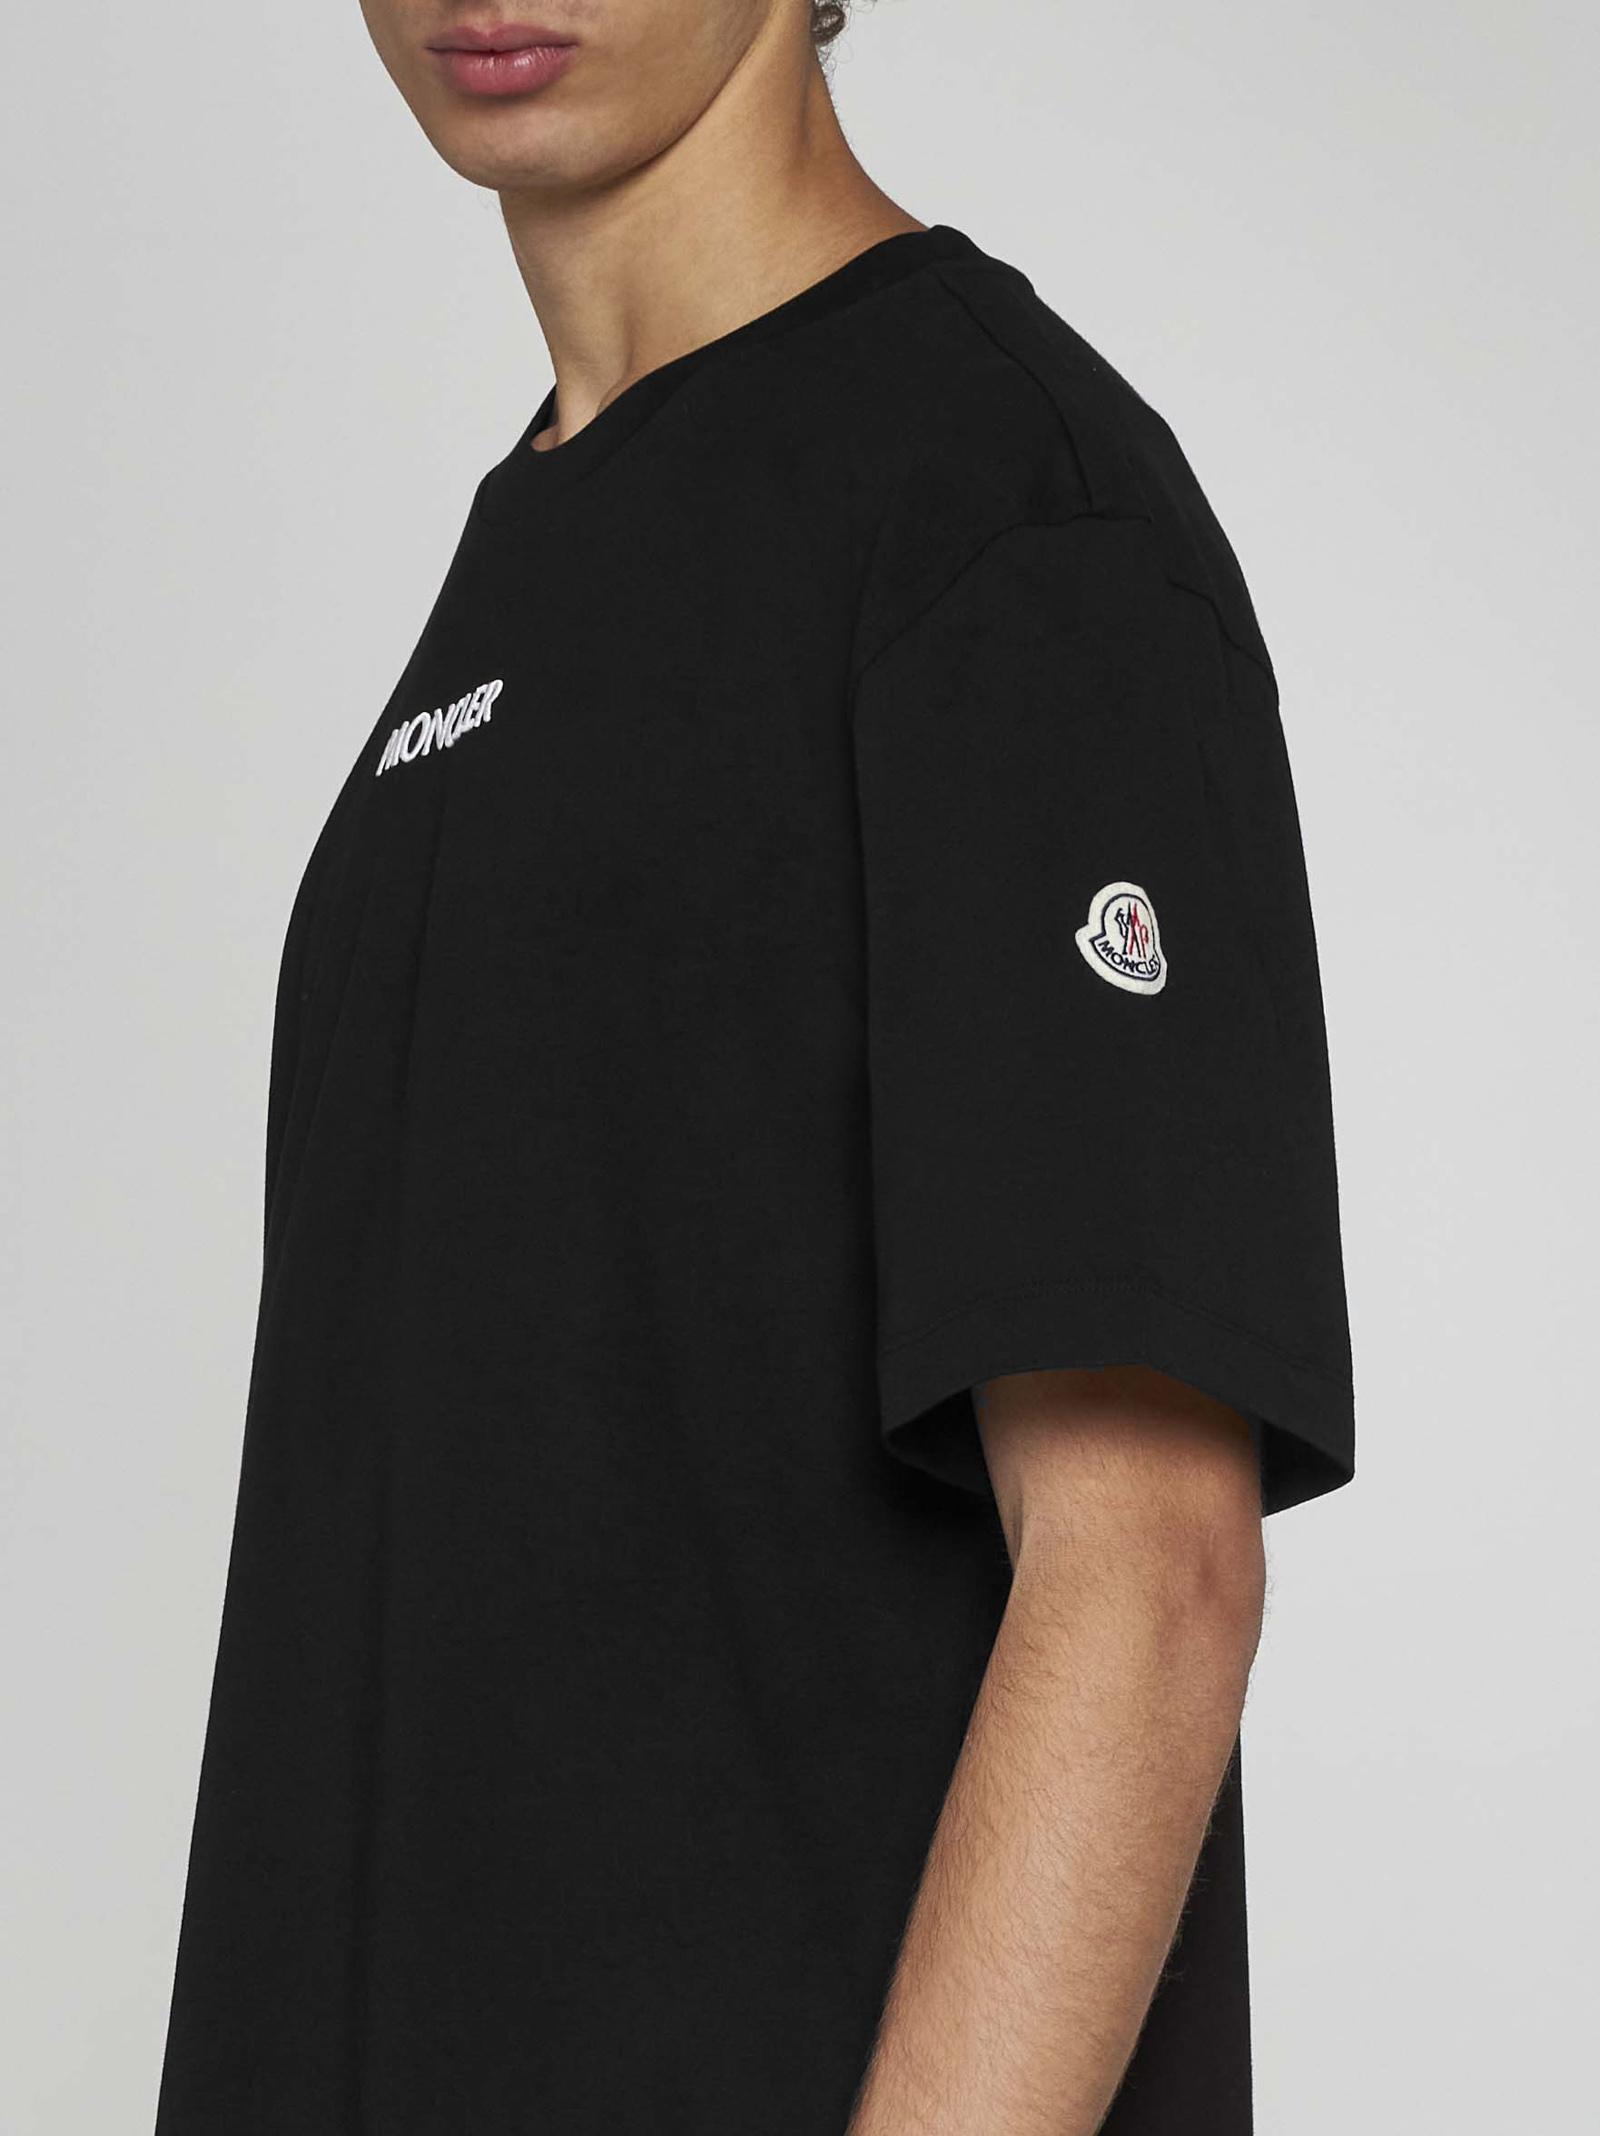 T-shirt Moncler Black size S International in Cotton - 28387982